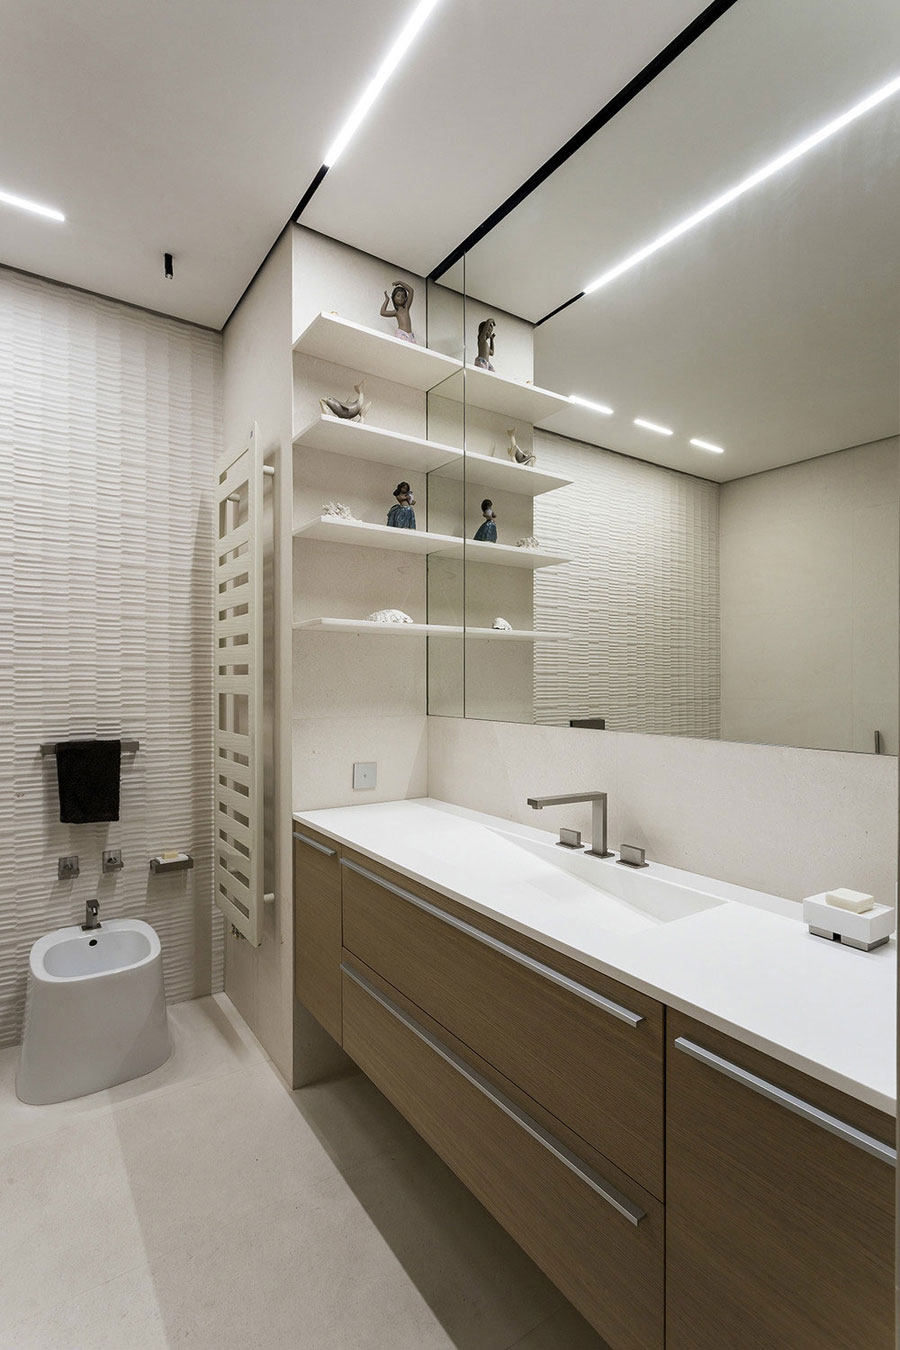 Bathroom Sinks That Have Amazing Design 6